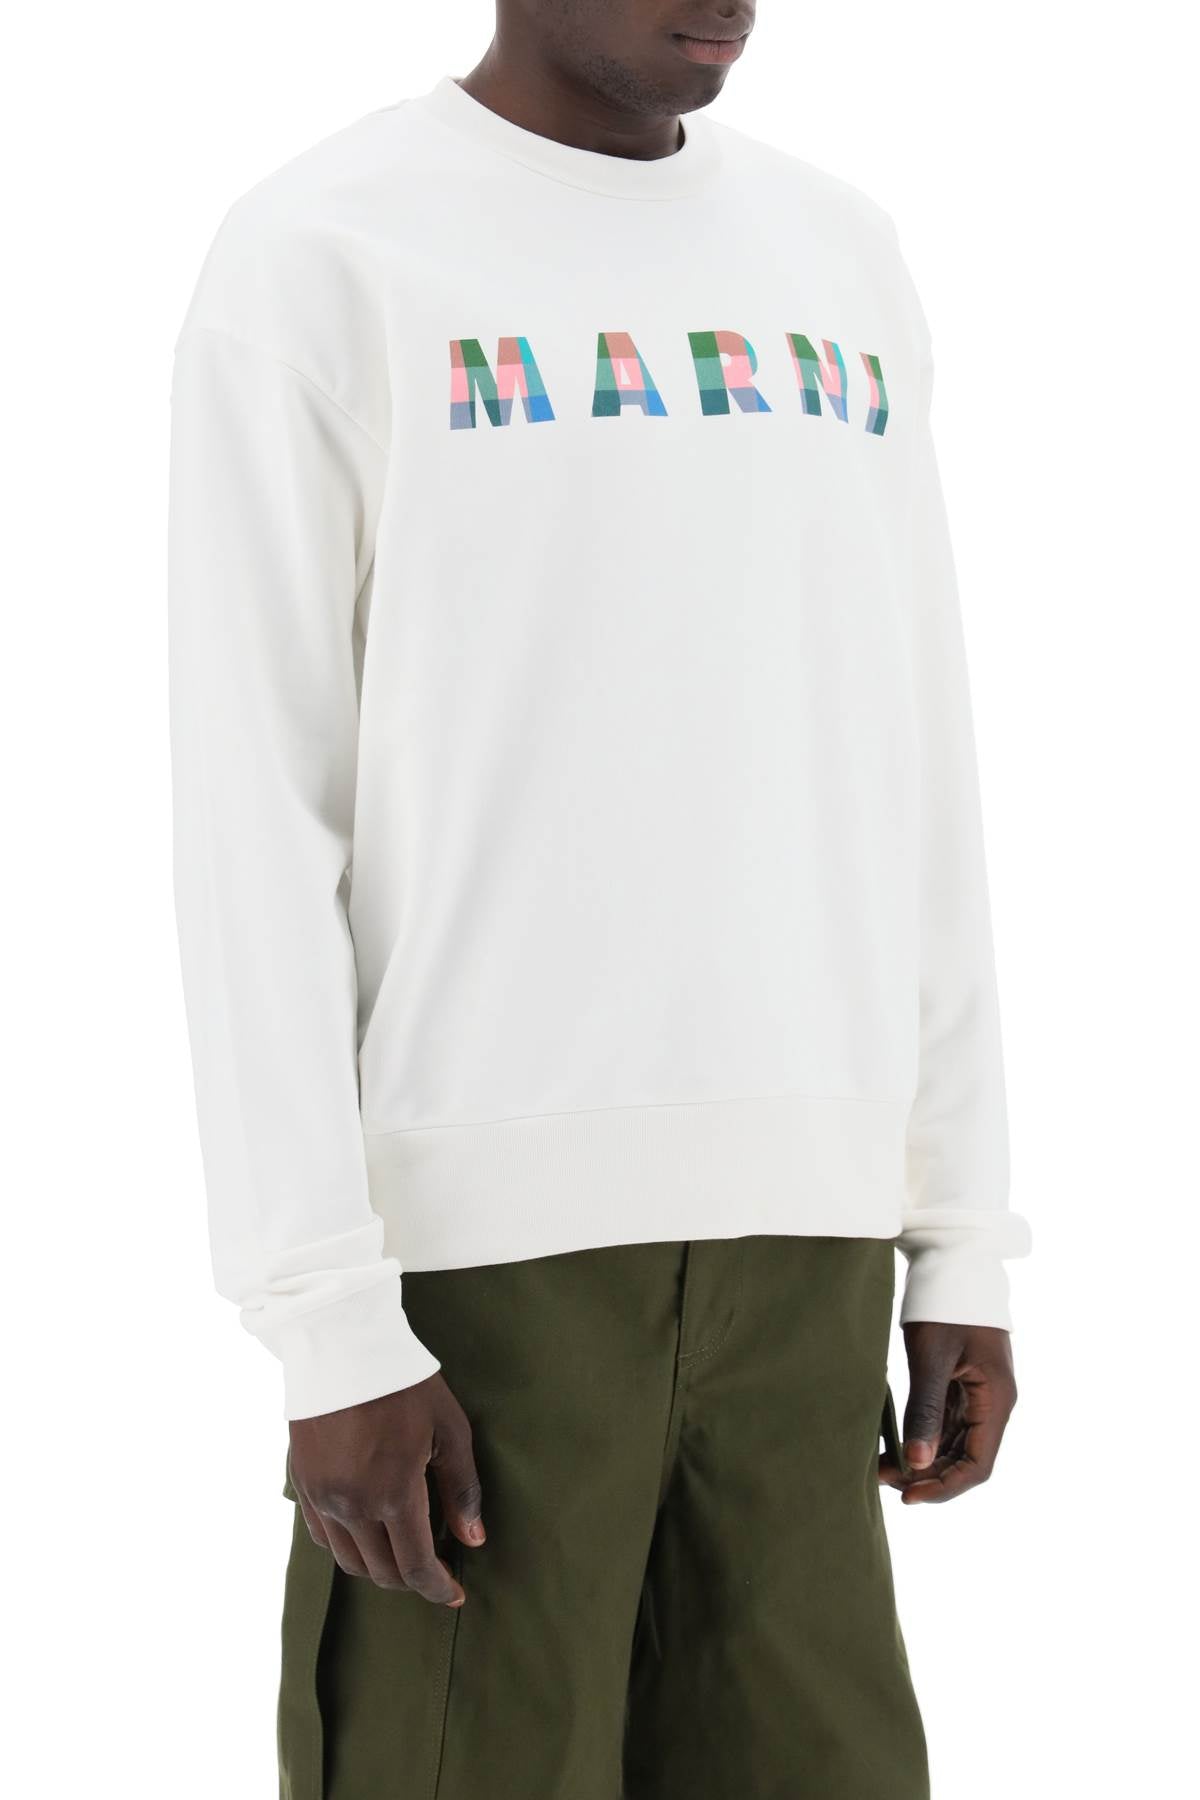 Marni sweatshirt with plaid logo-1